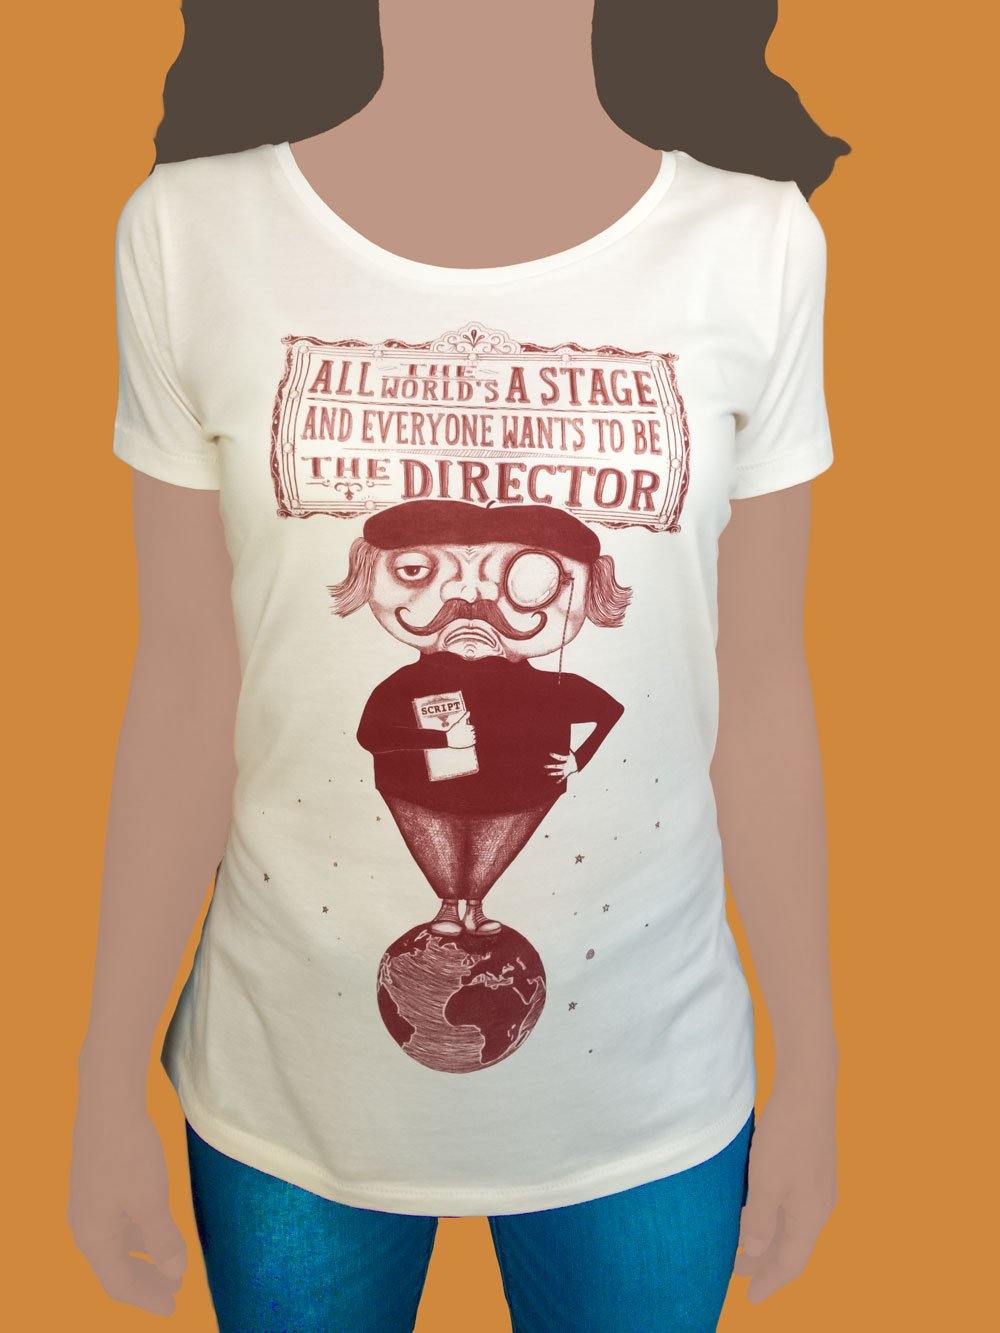 The Director show business t-shirt hand printed organic cotton t-shirt